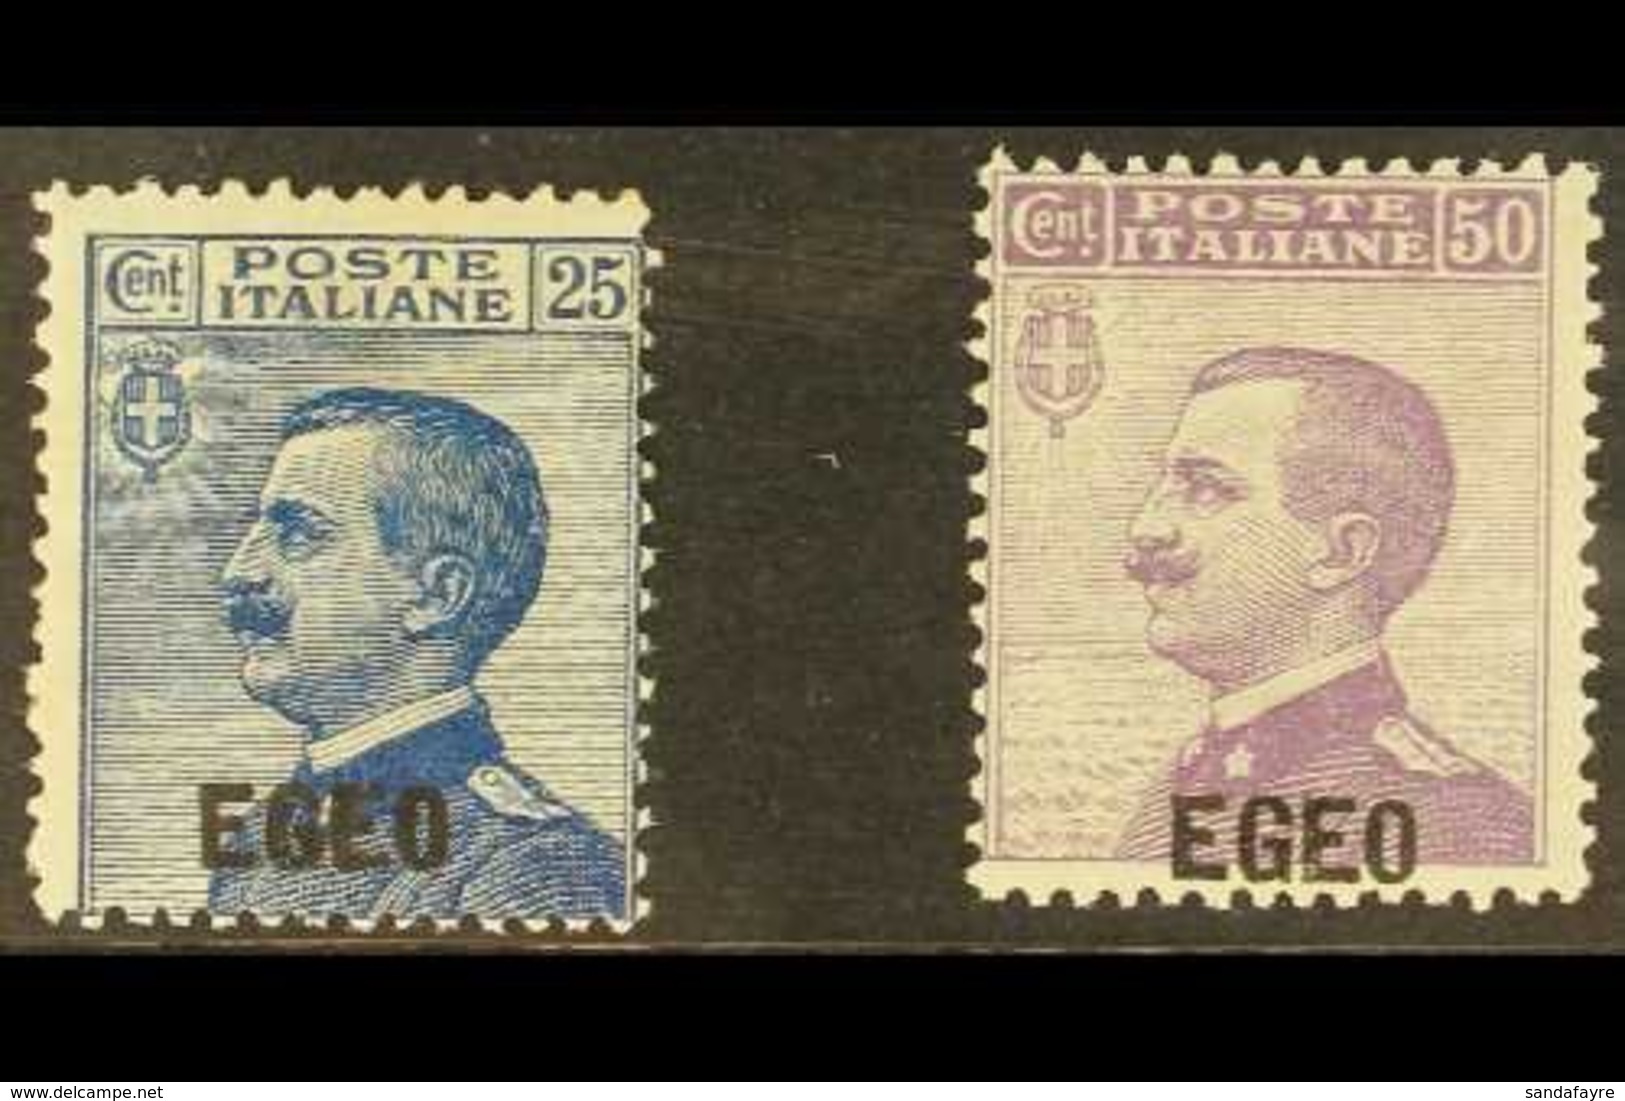 EGEO (DODECANESE ISLANDS) 1912 Overprints Complete Set (SG 1/2, Sassone 1/2), Fine Mint, Fresh. (2 Stamps) For More Imag - Other & Unclassified